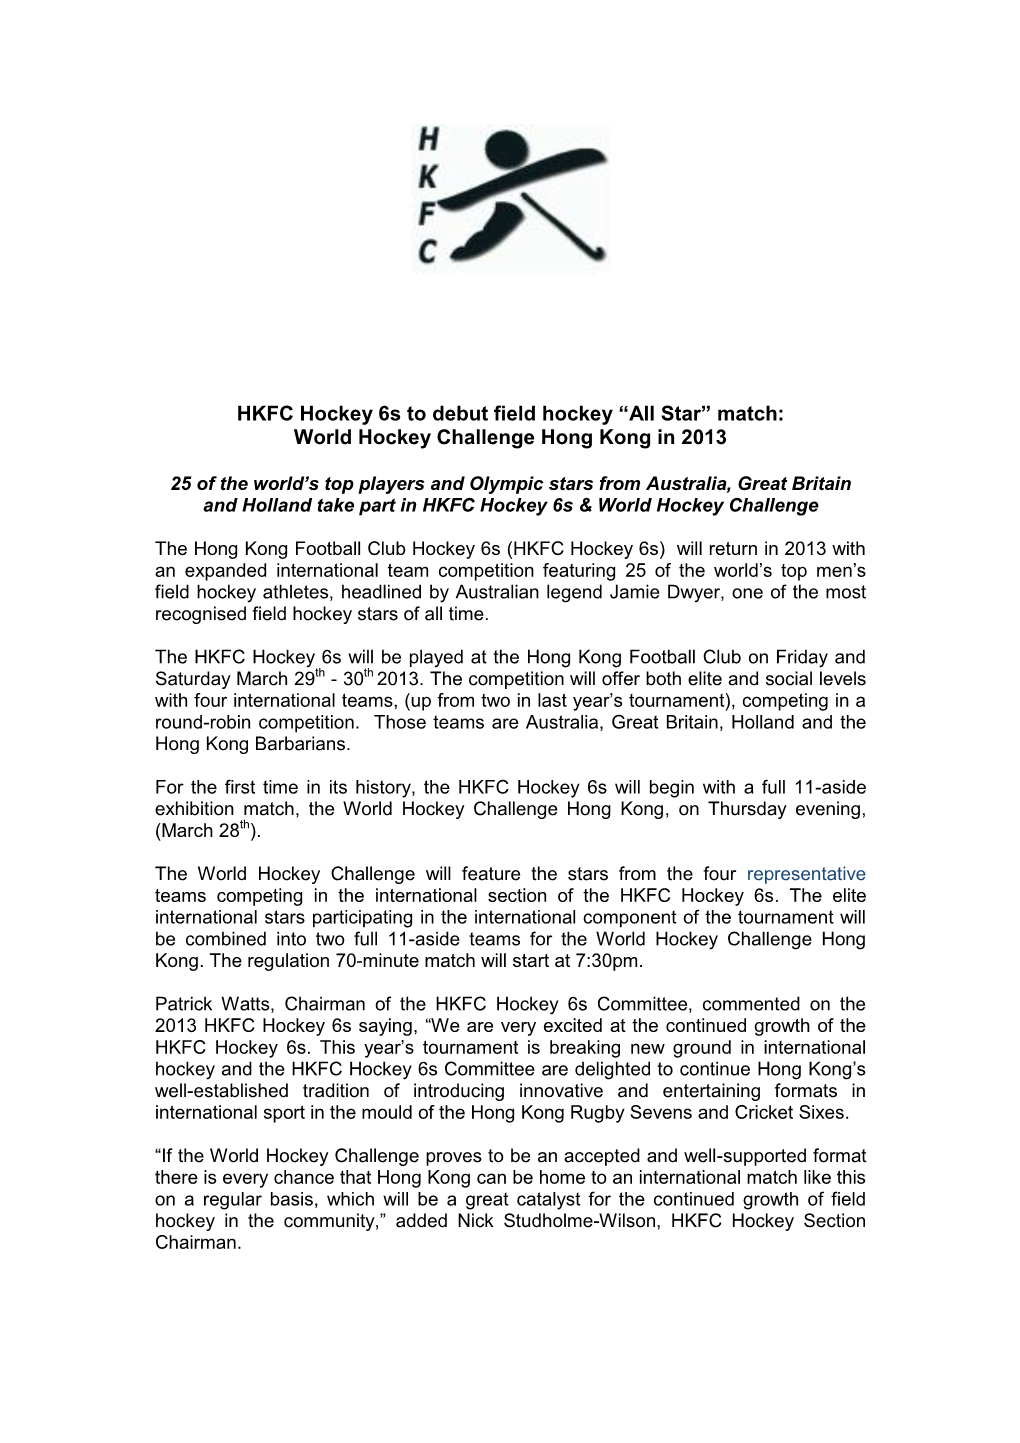 HKFC Hockey 6S to Debut Field Hockey “All Star” Match: World Hockey Challenge Hong Kong in 2013